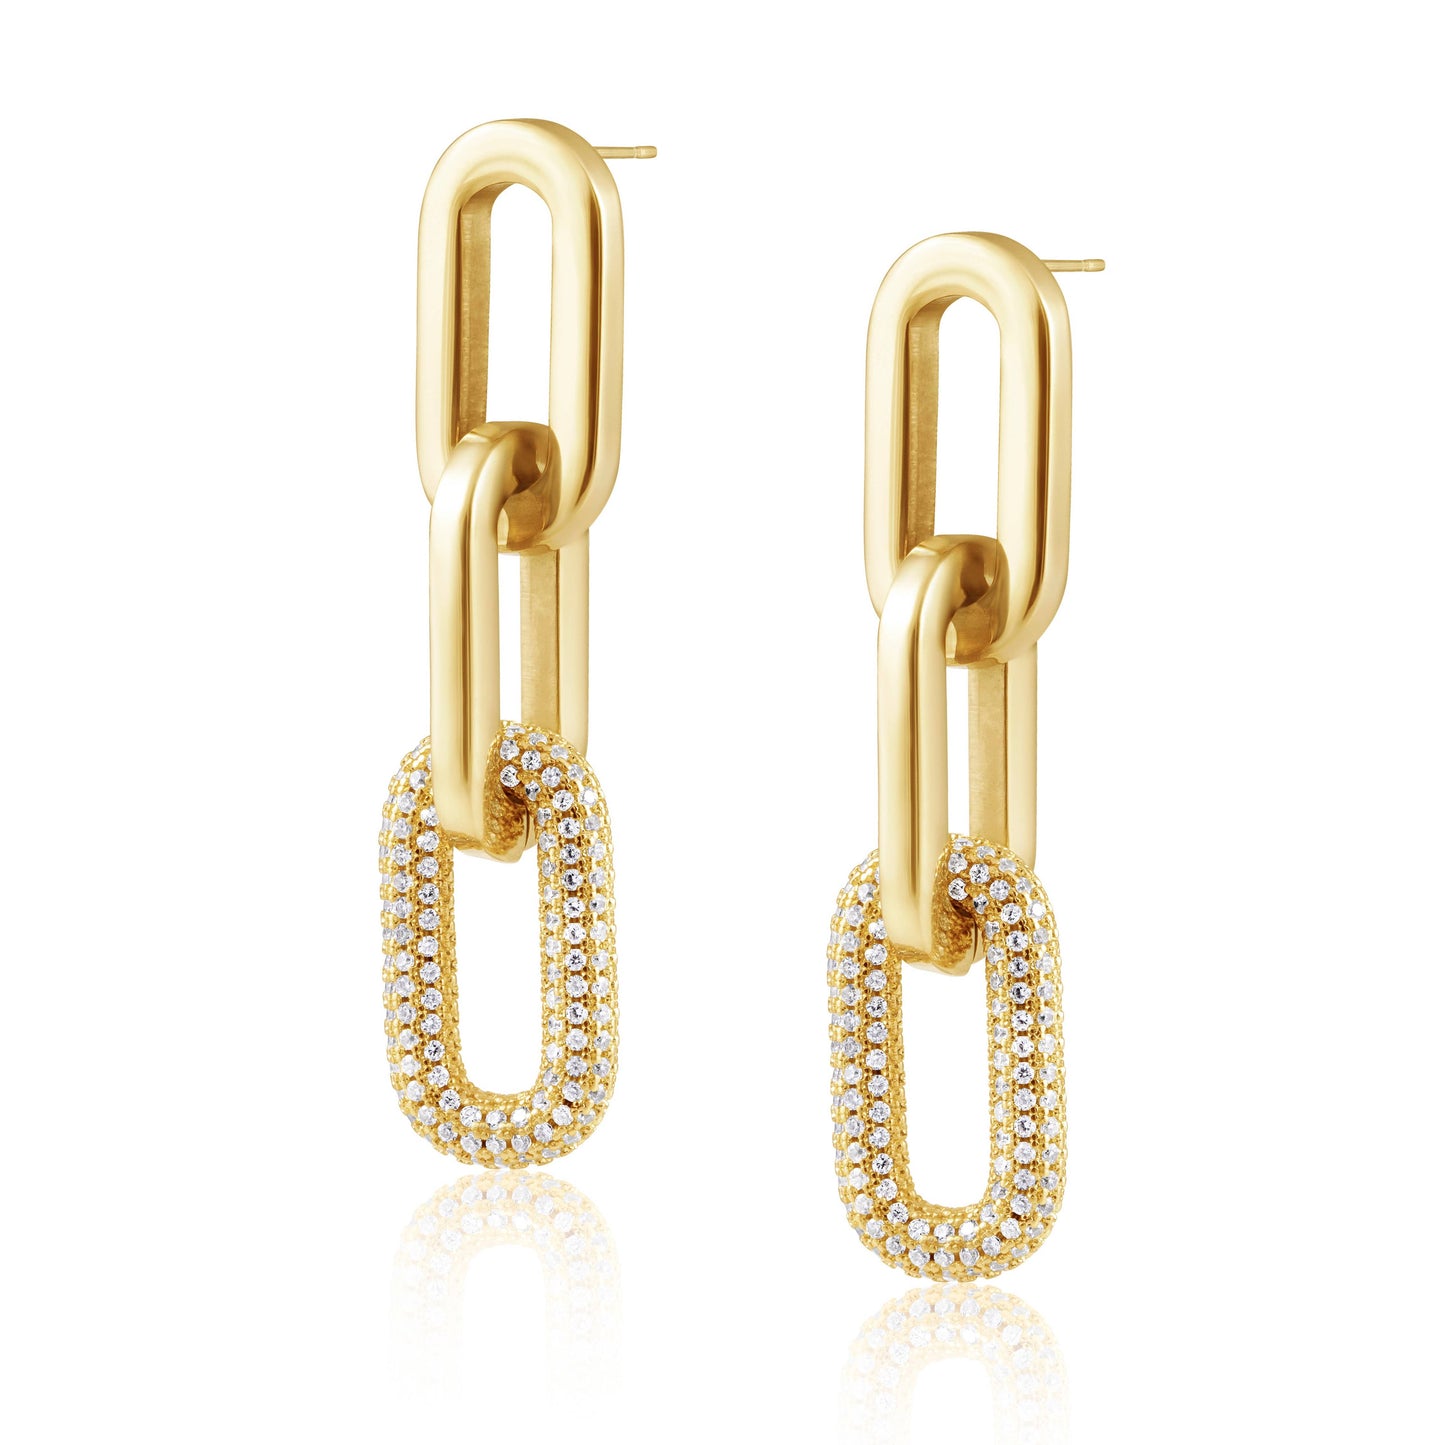 Sahira Jewelry Design - Jenna Pave Earrings - Gold